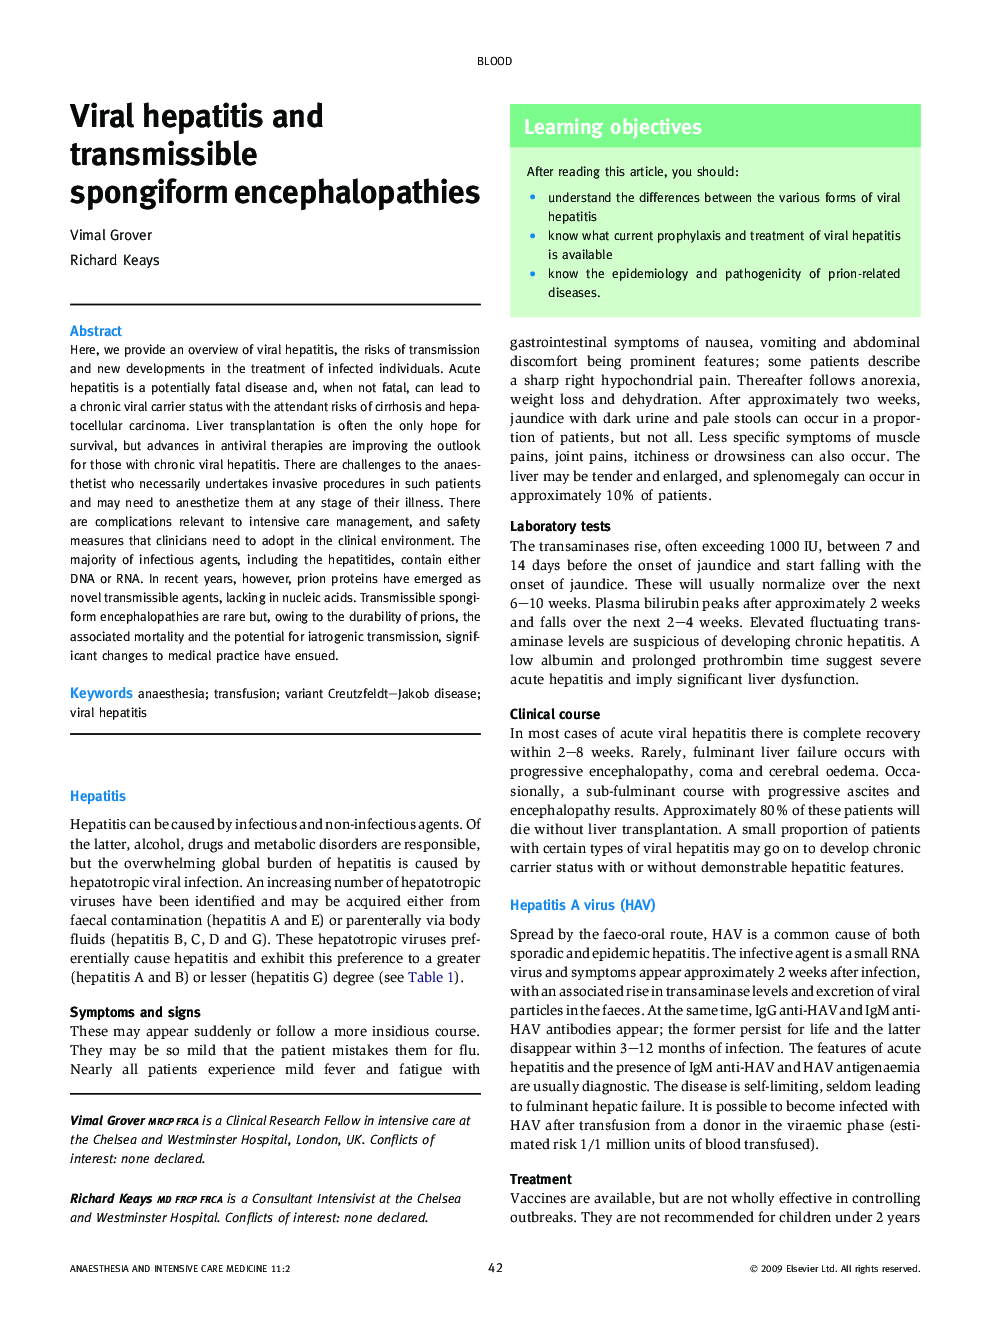 Viral hepatitis and transmissible spongiform encephalopathies